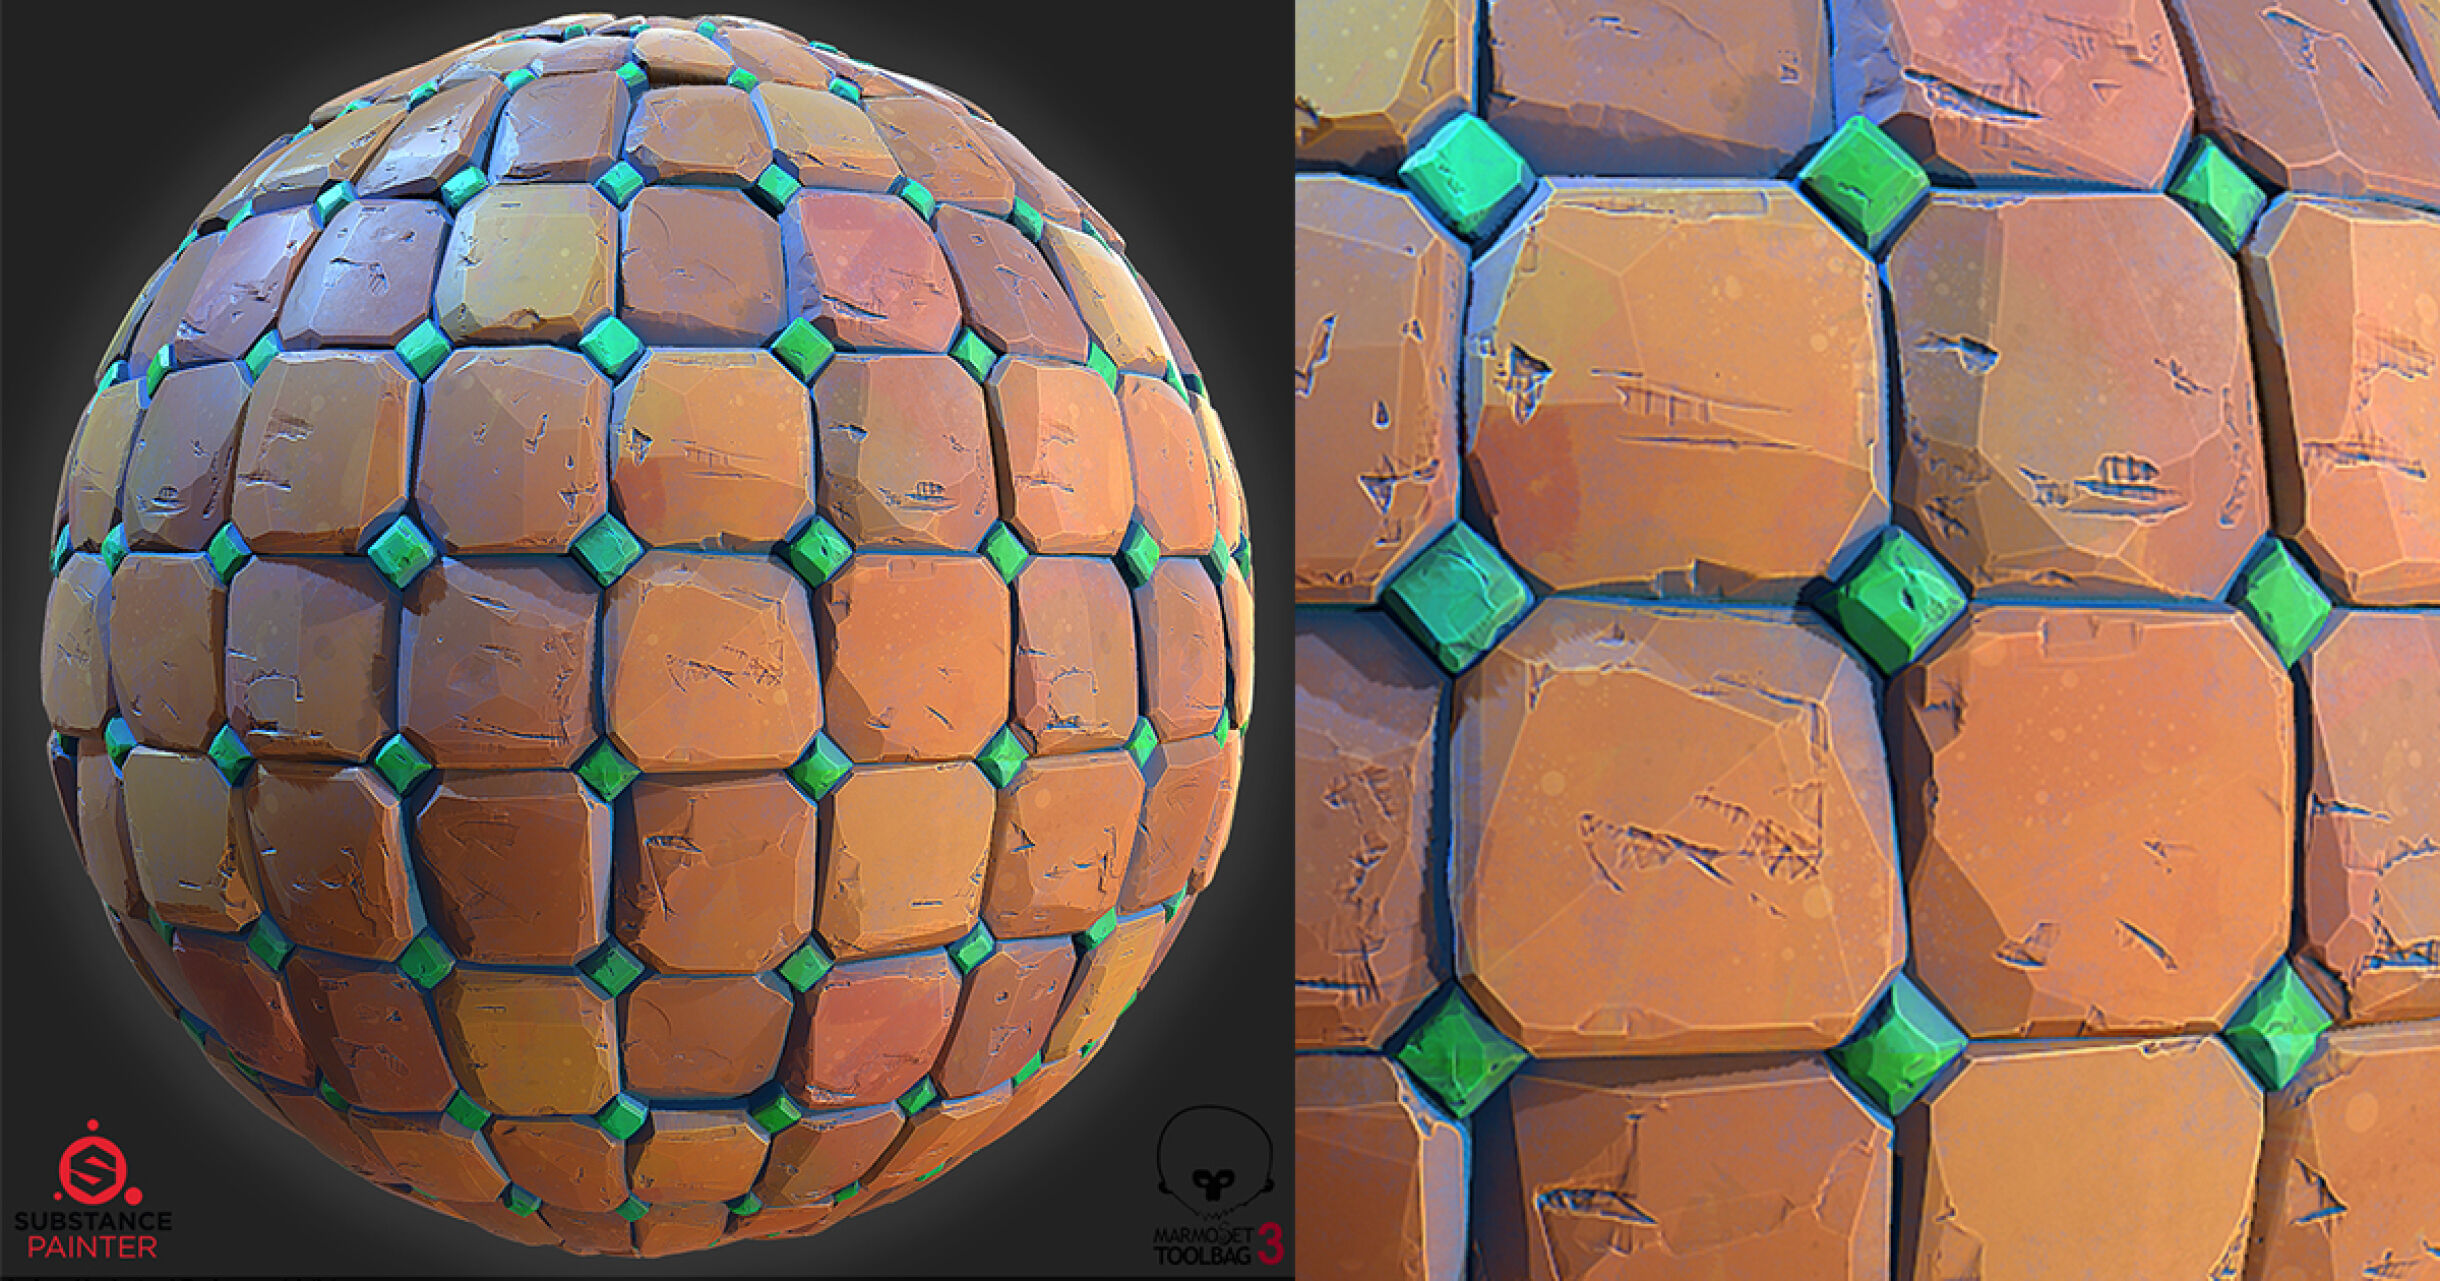 Sharp Rock 3 3D! Tiled texture provided !